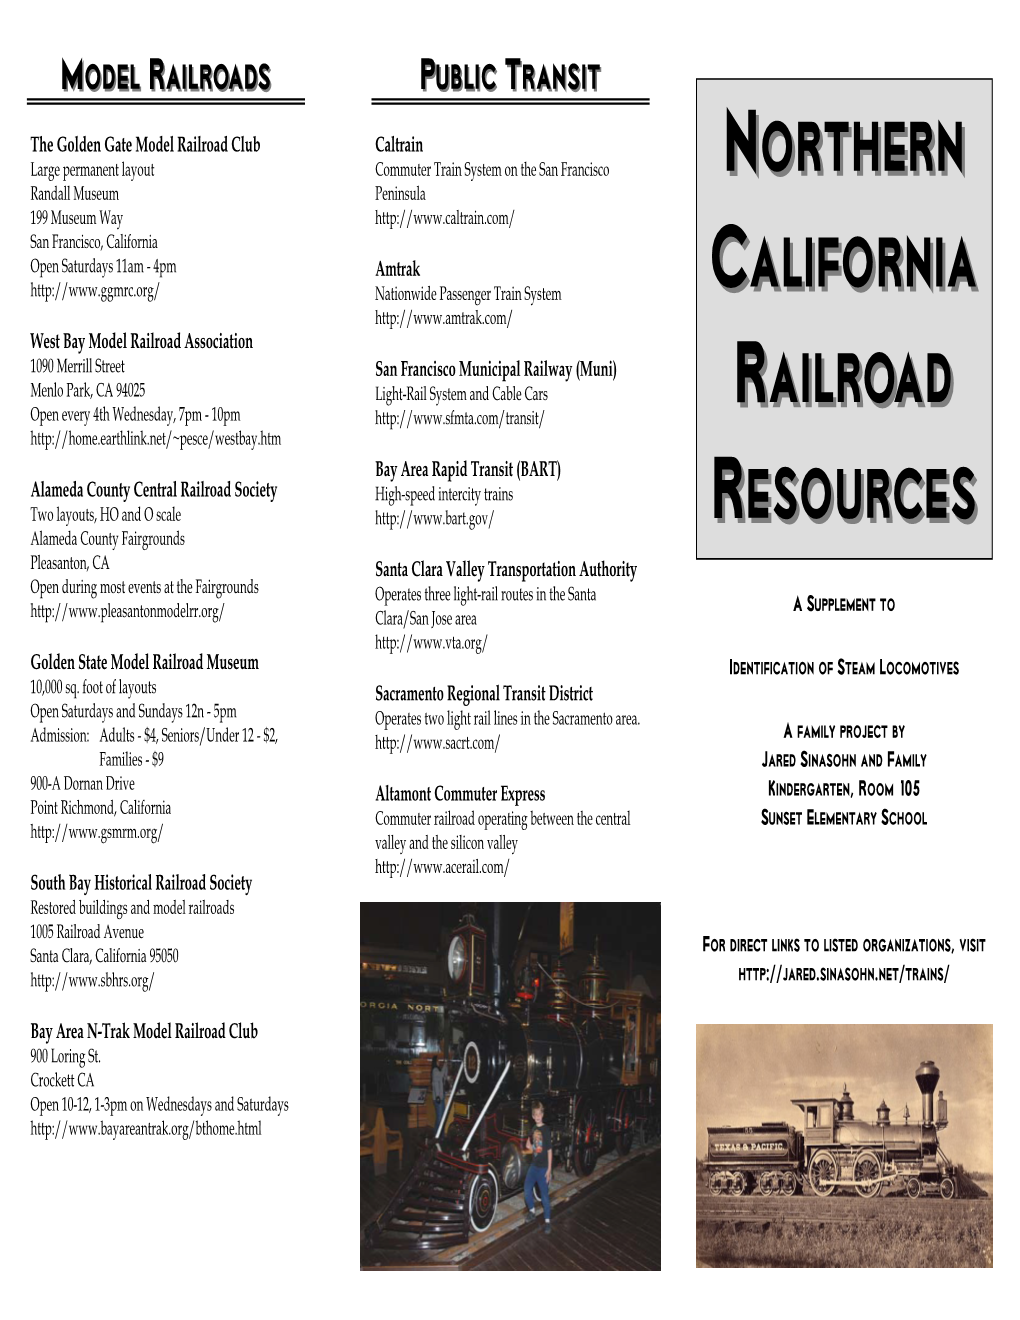 Northern California Railroad Resources